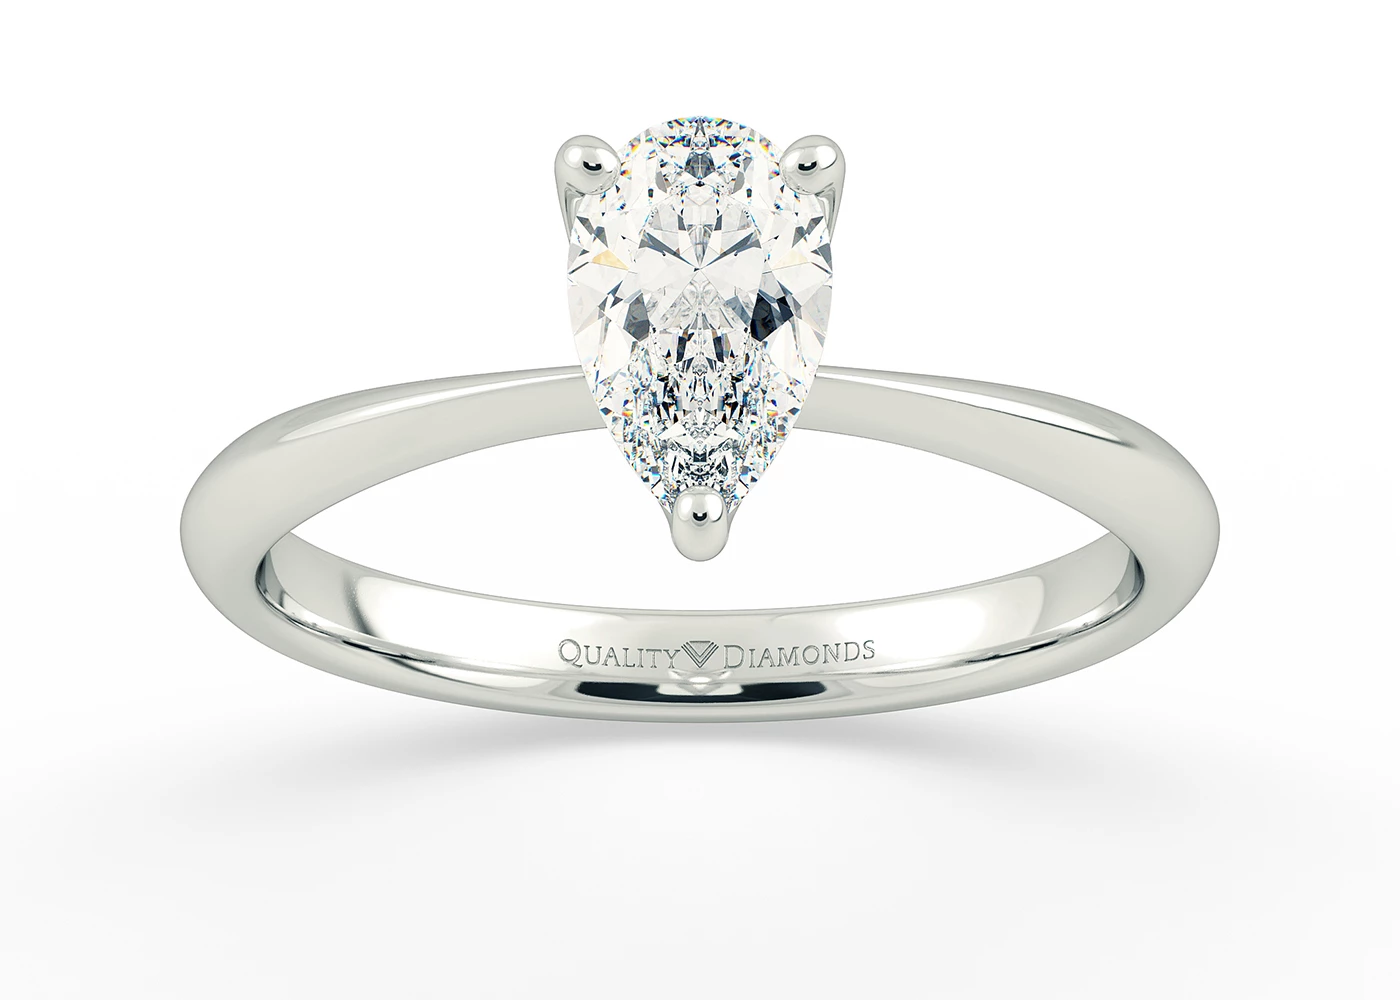 One Carat Pear Solitaire Diamond Engagement Ring in Platinum 950